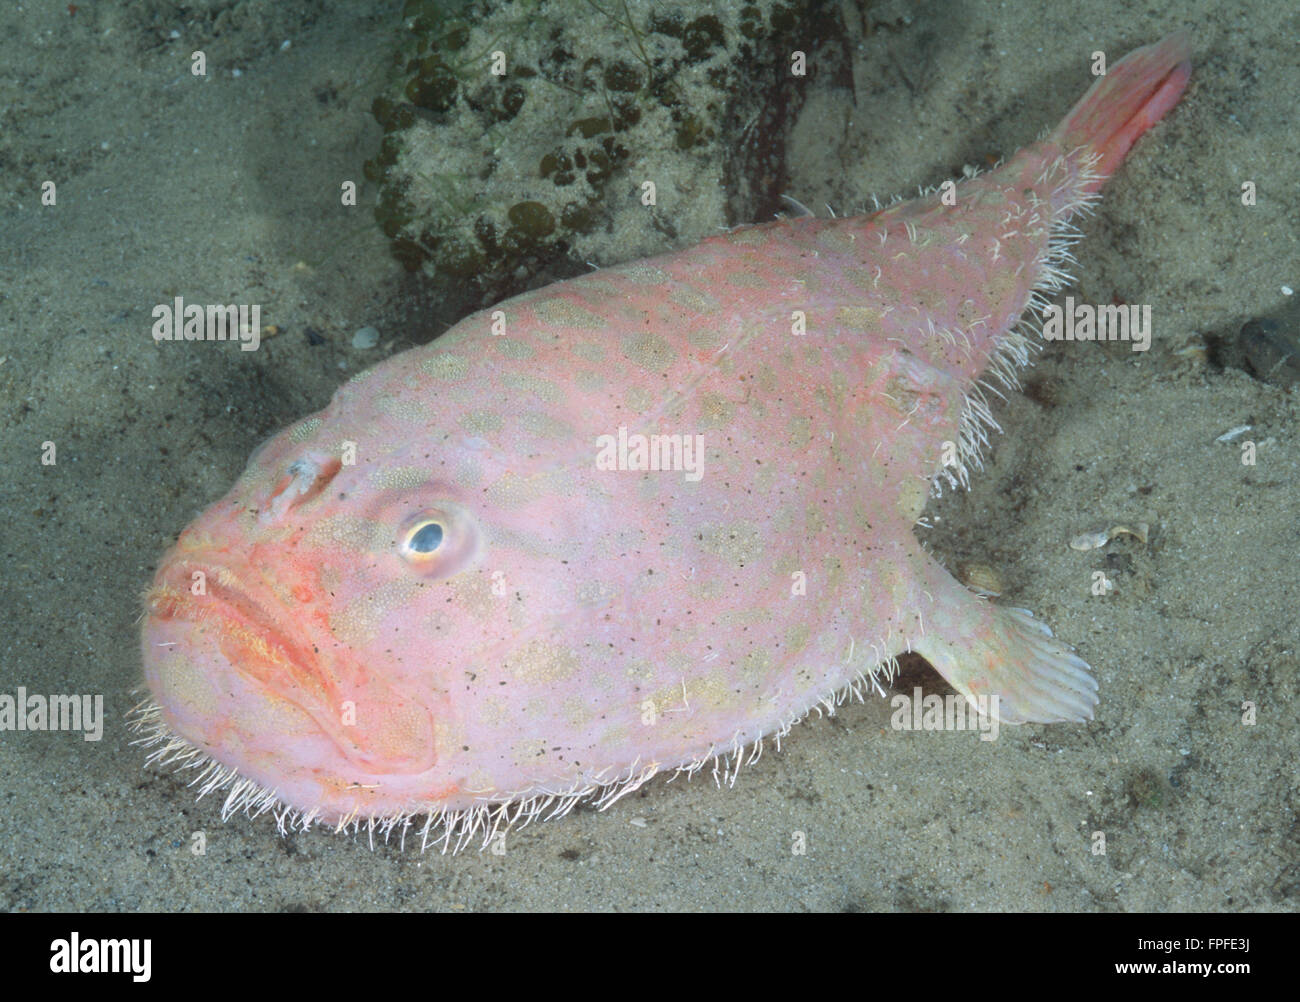 Endeavour Coffinfish (Chaunax endeavouri) Deepwater anglerfish species. Stock Photo